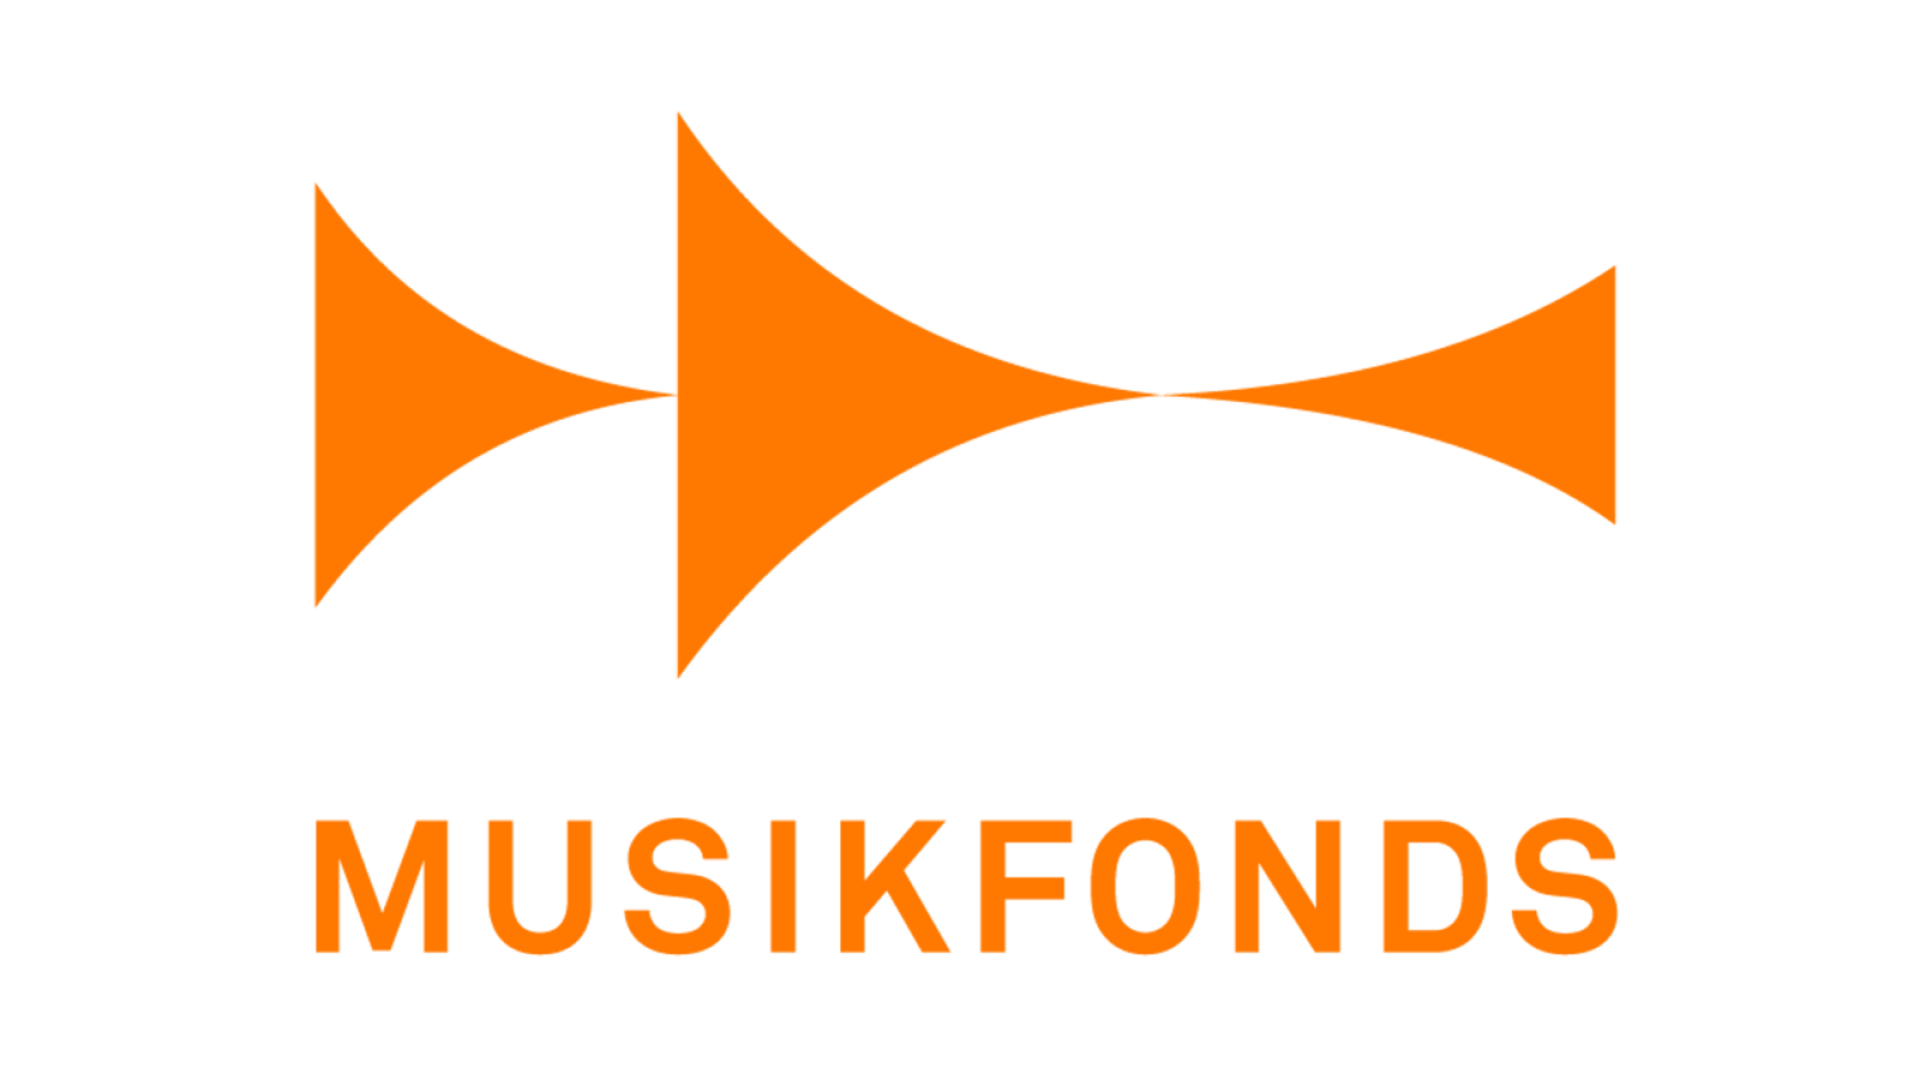 Musikfonds Logo